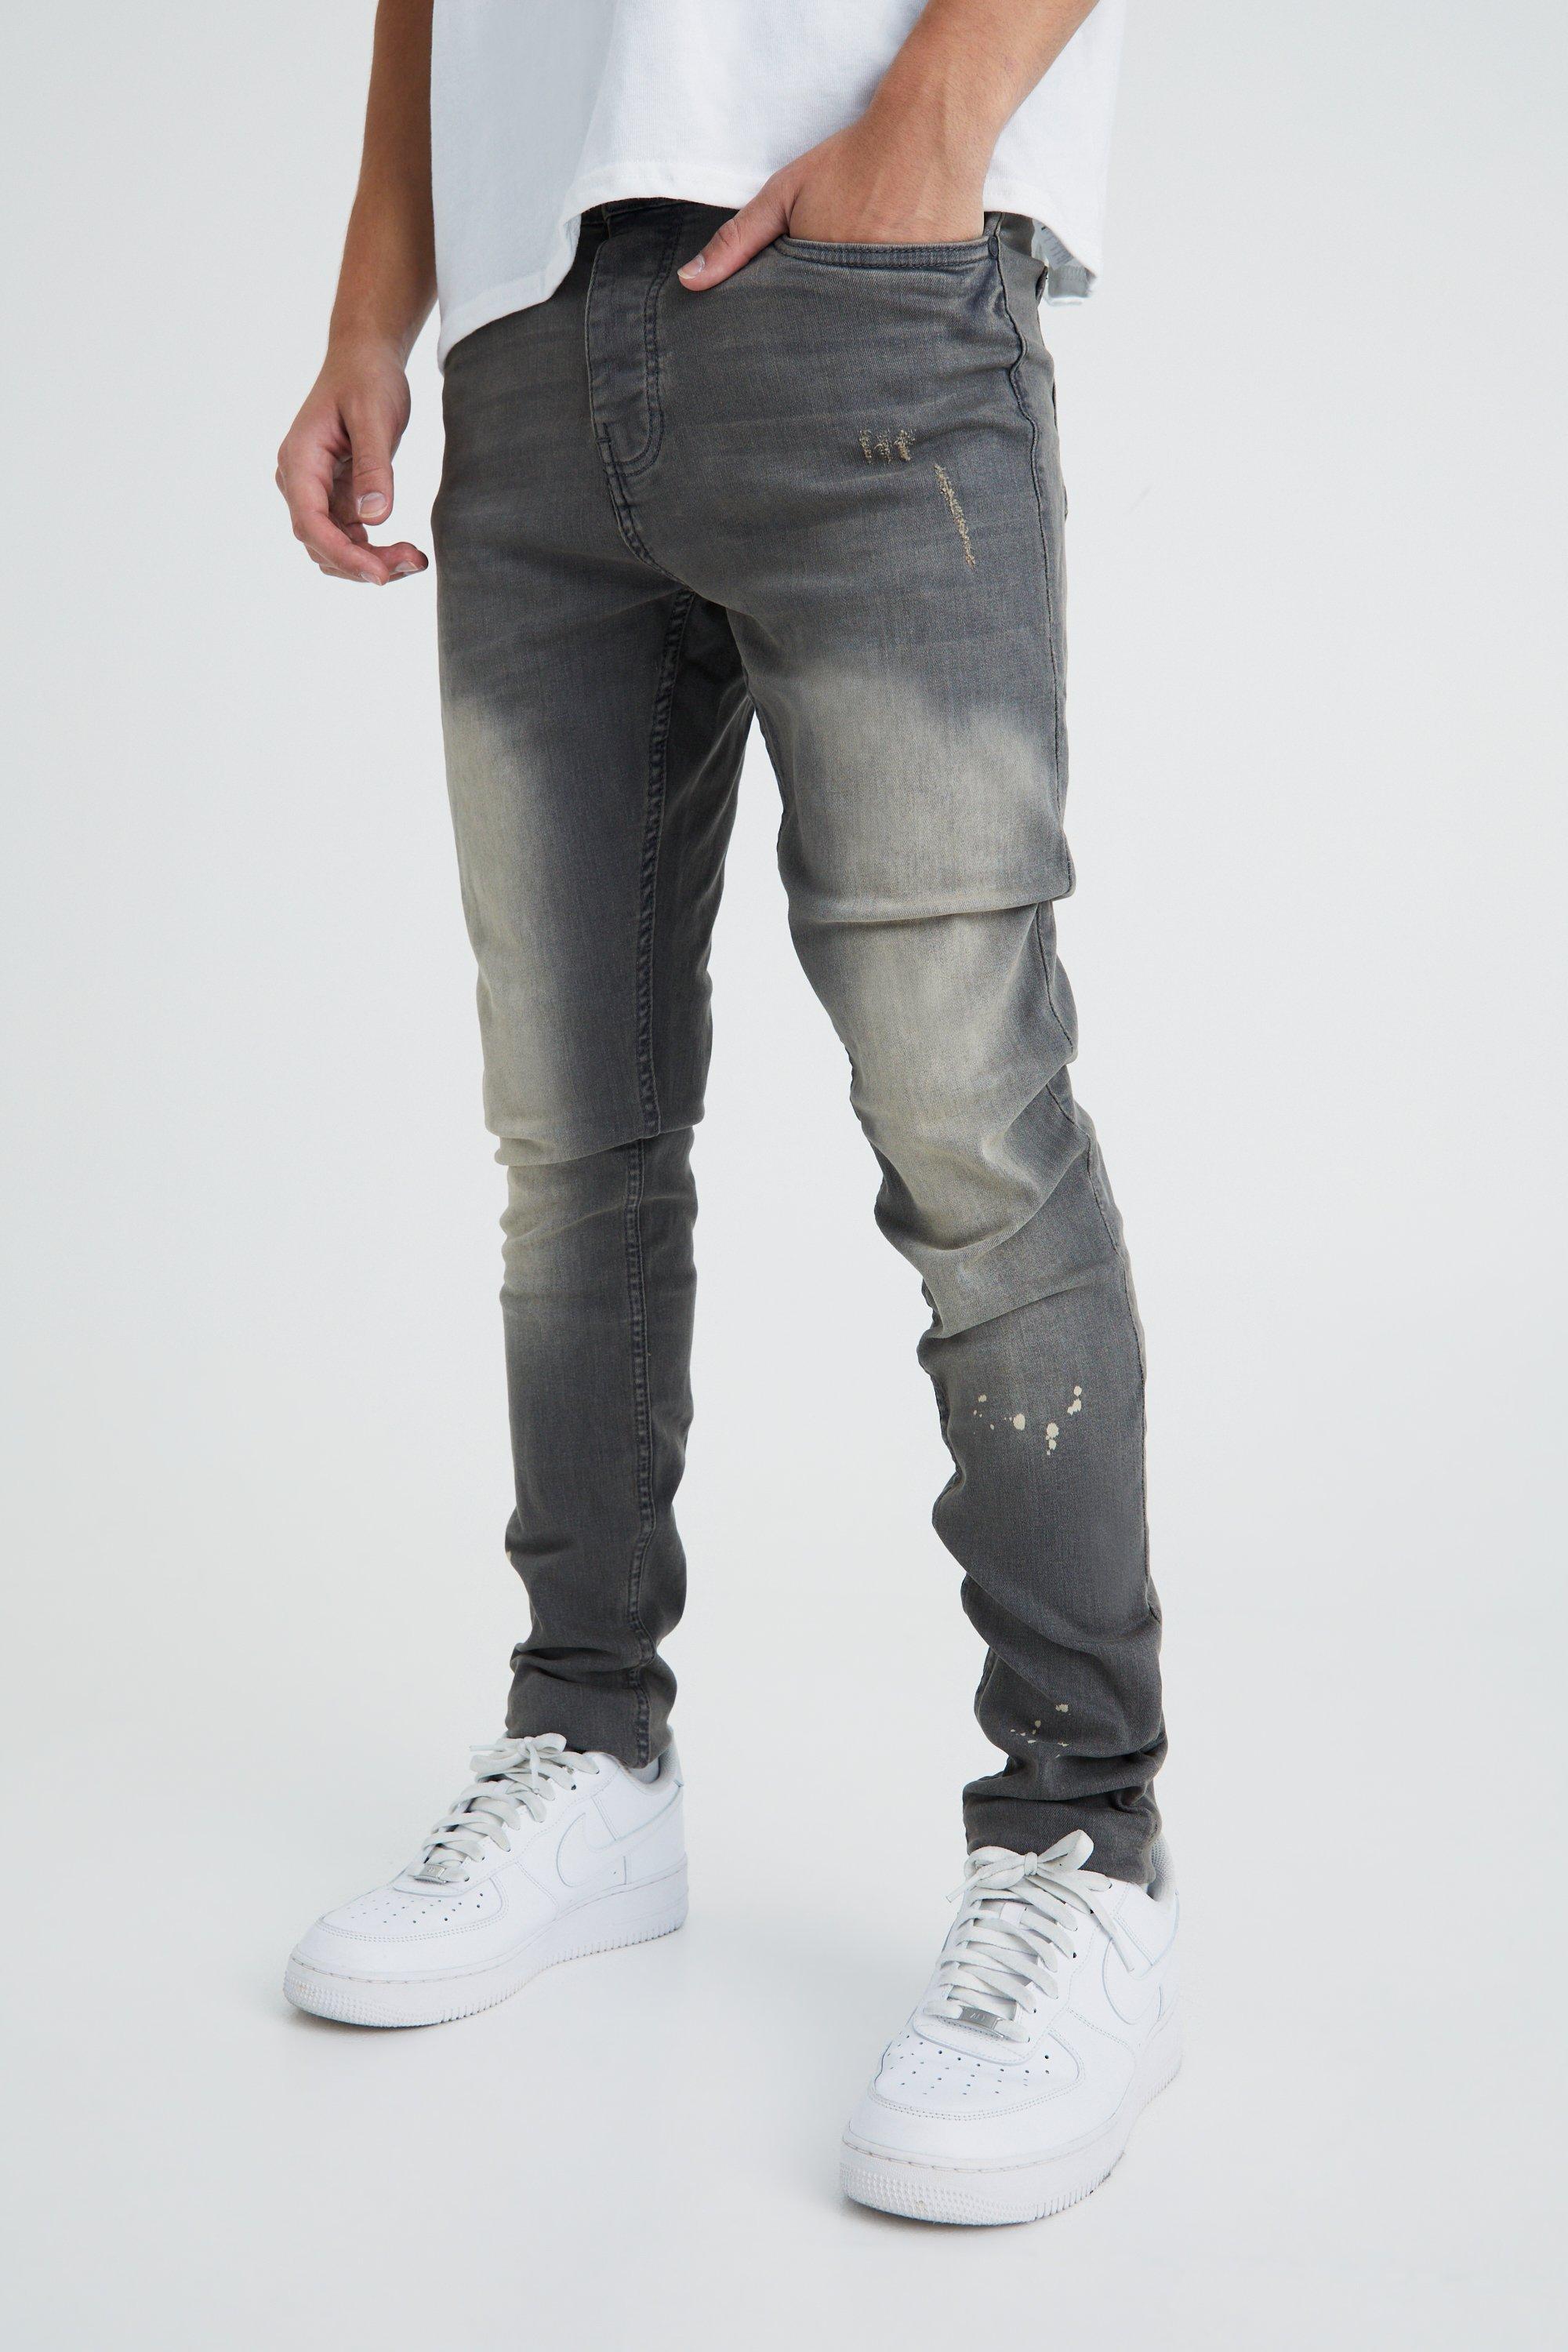 Grey Jeans For Men, Dark Grey & Light Grey Jeans